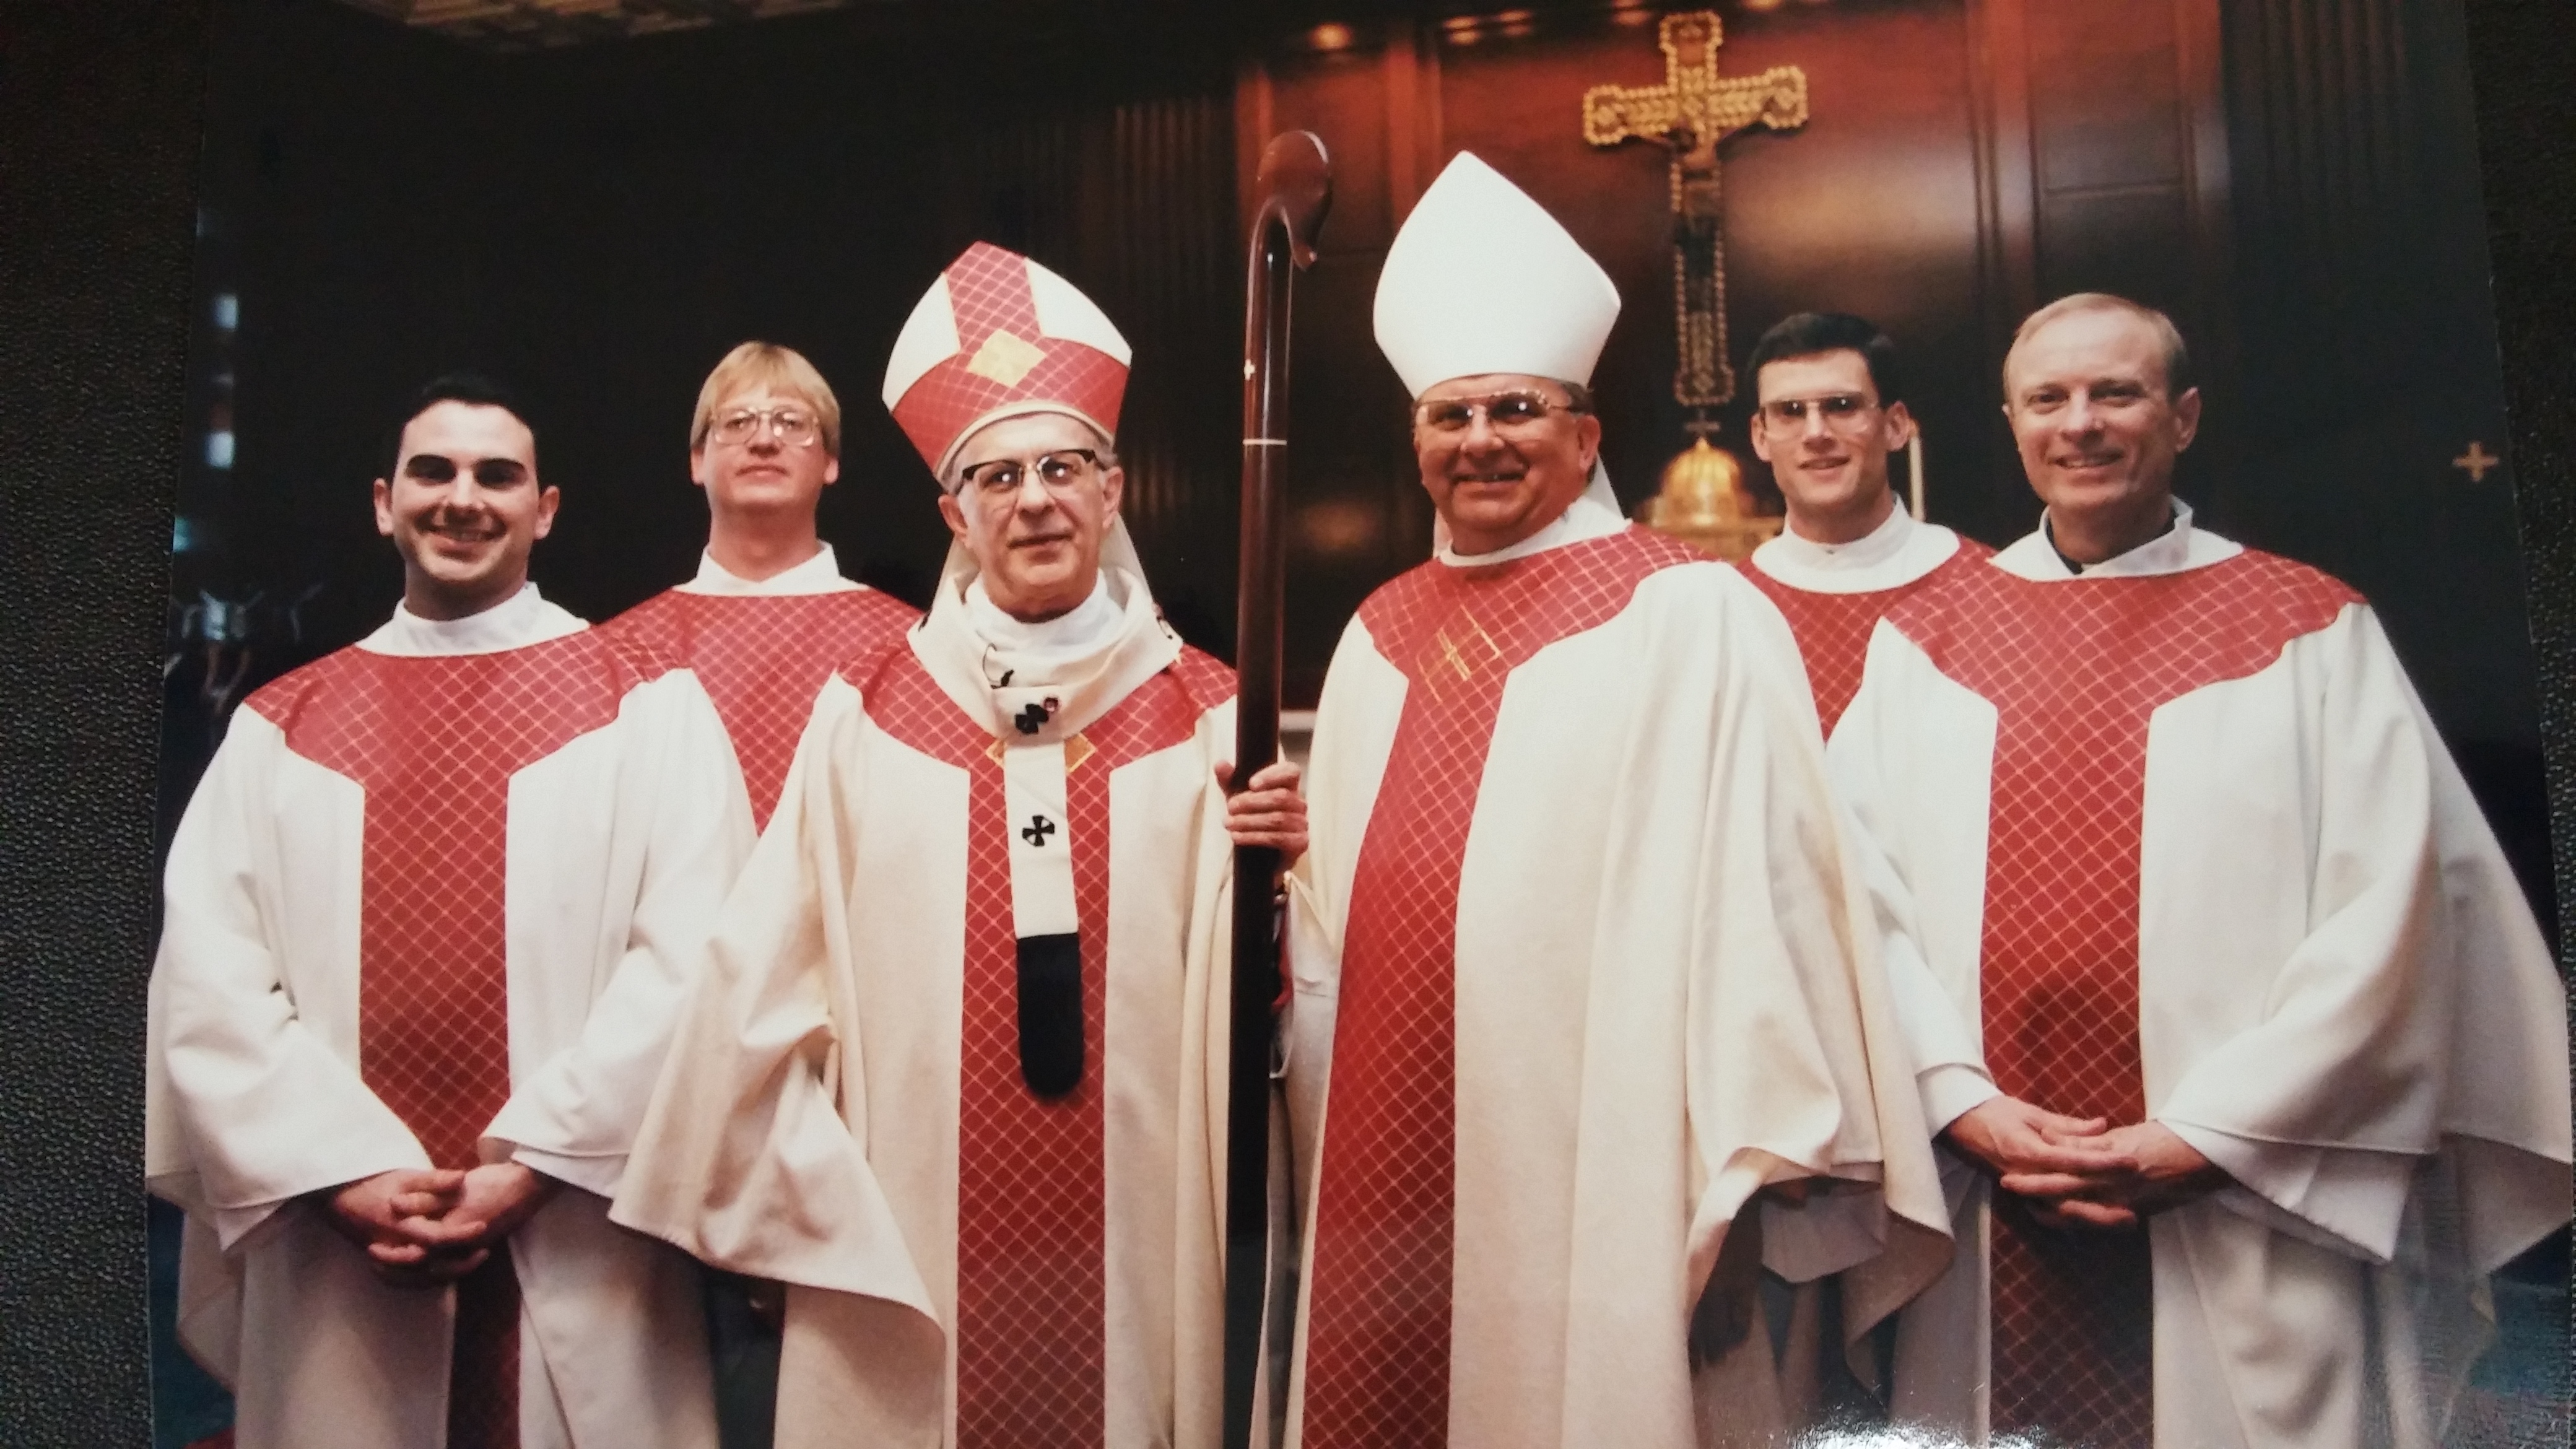 Archbishop Daniel Pilarczyk and Bishop Carl Moeddel with Fathers Jeffrey Fullmer, Mark Meyer, Patrick Sloneker, Ronald Piepmeyer